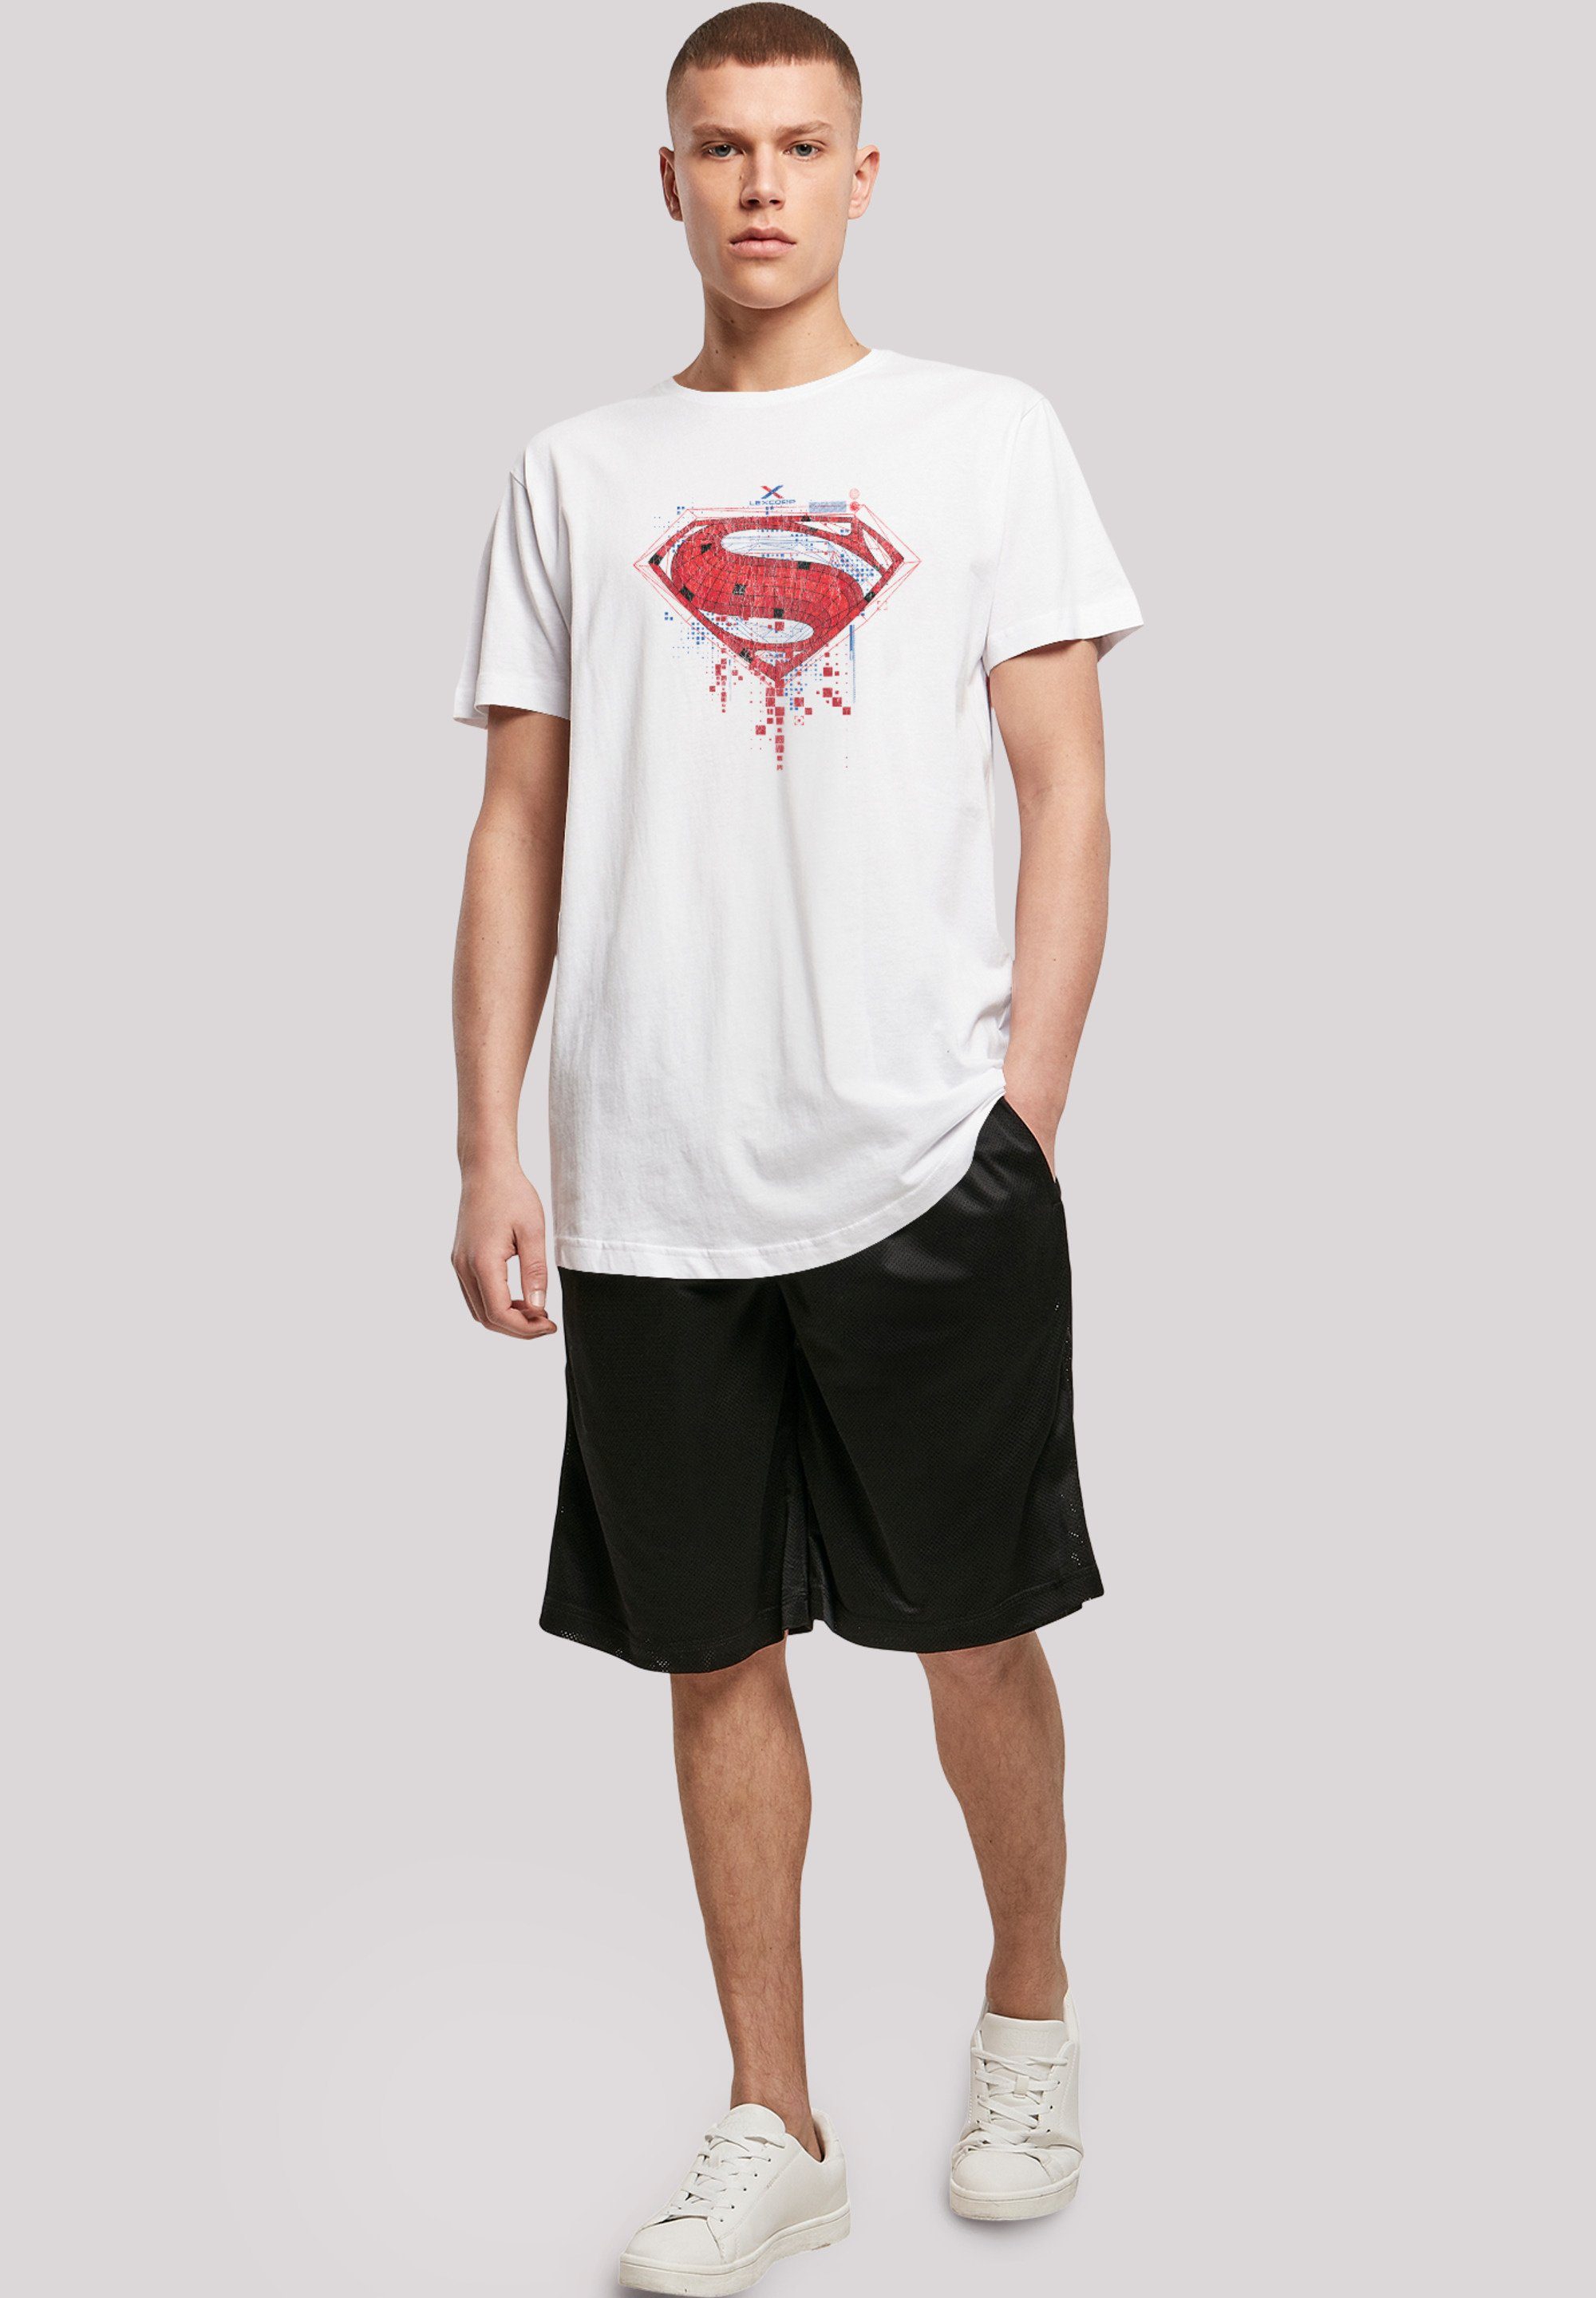 Logo Superman F4NT4STIC Print DC Comis Superhelden T-Shirt Geo